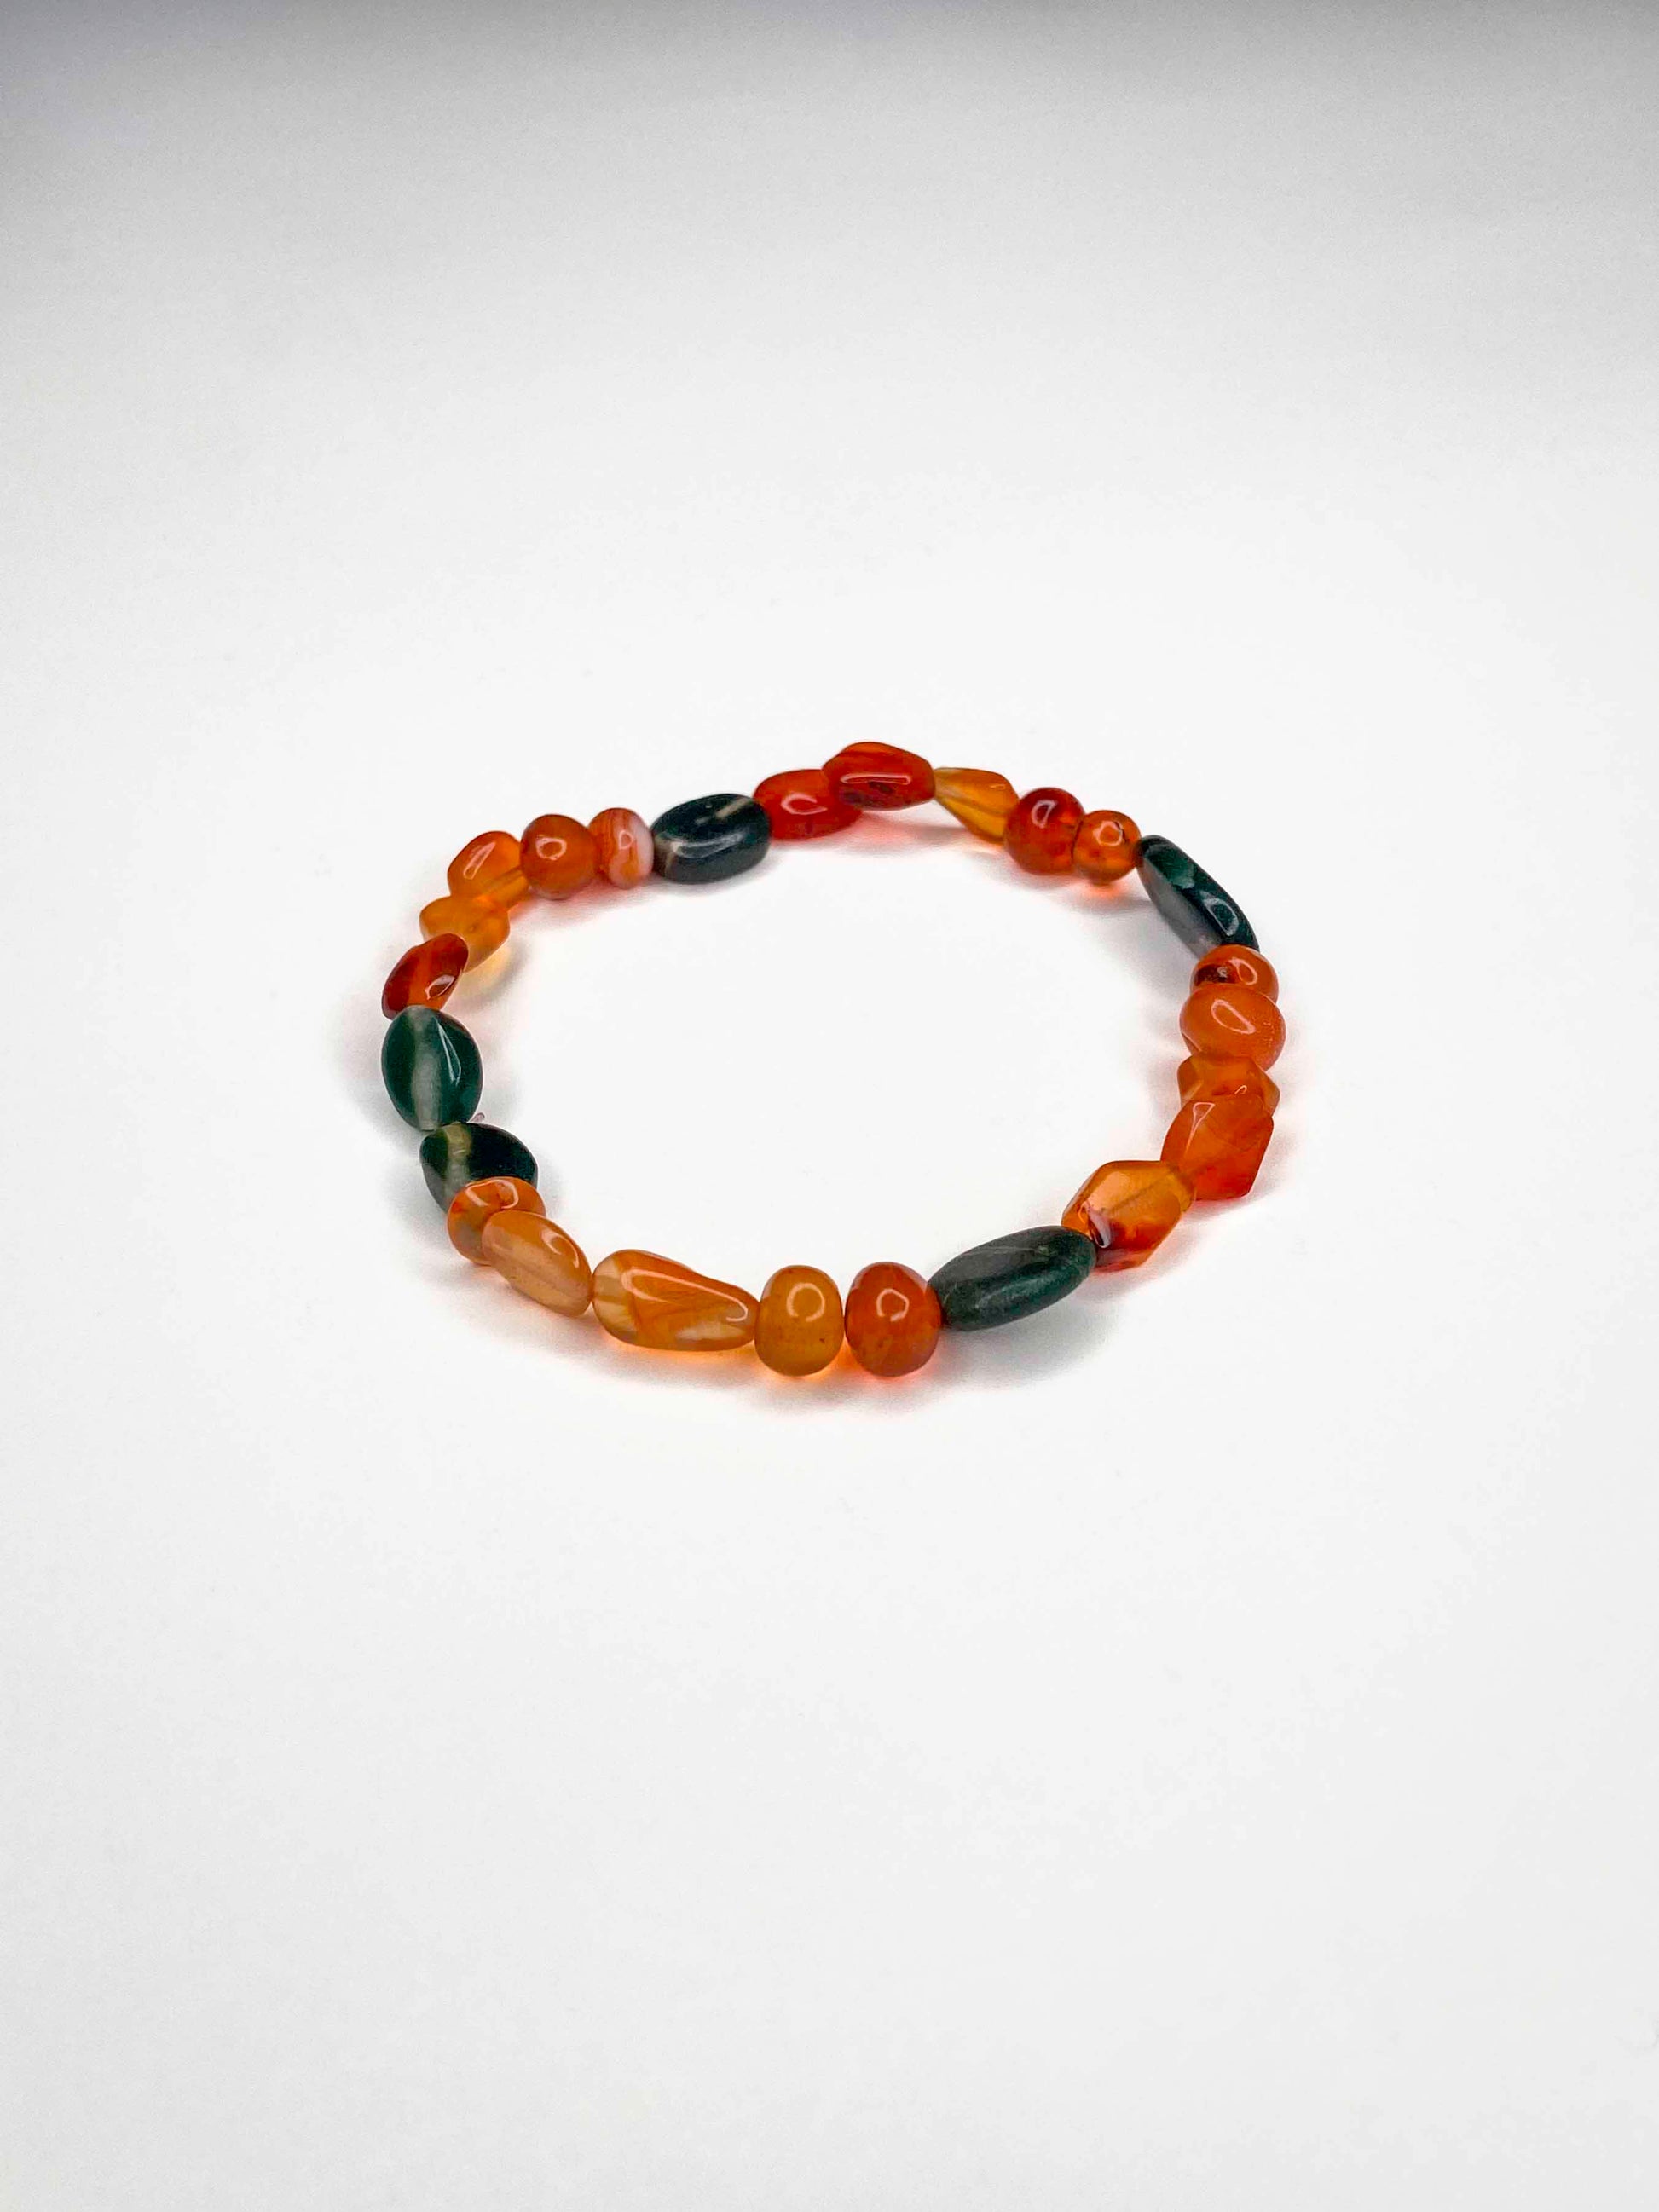 Handcrafted bracelet made using carnelian beads. 